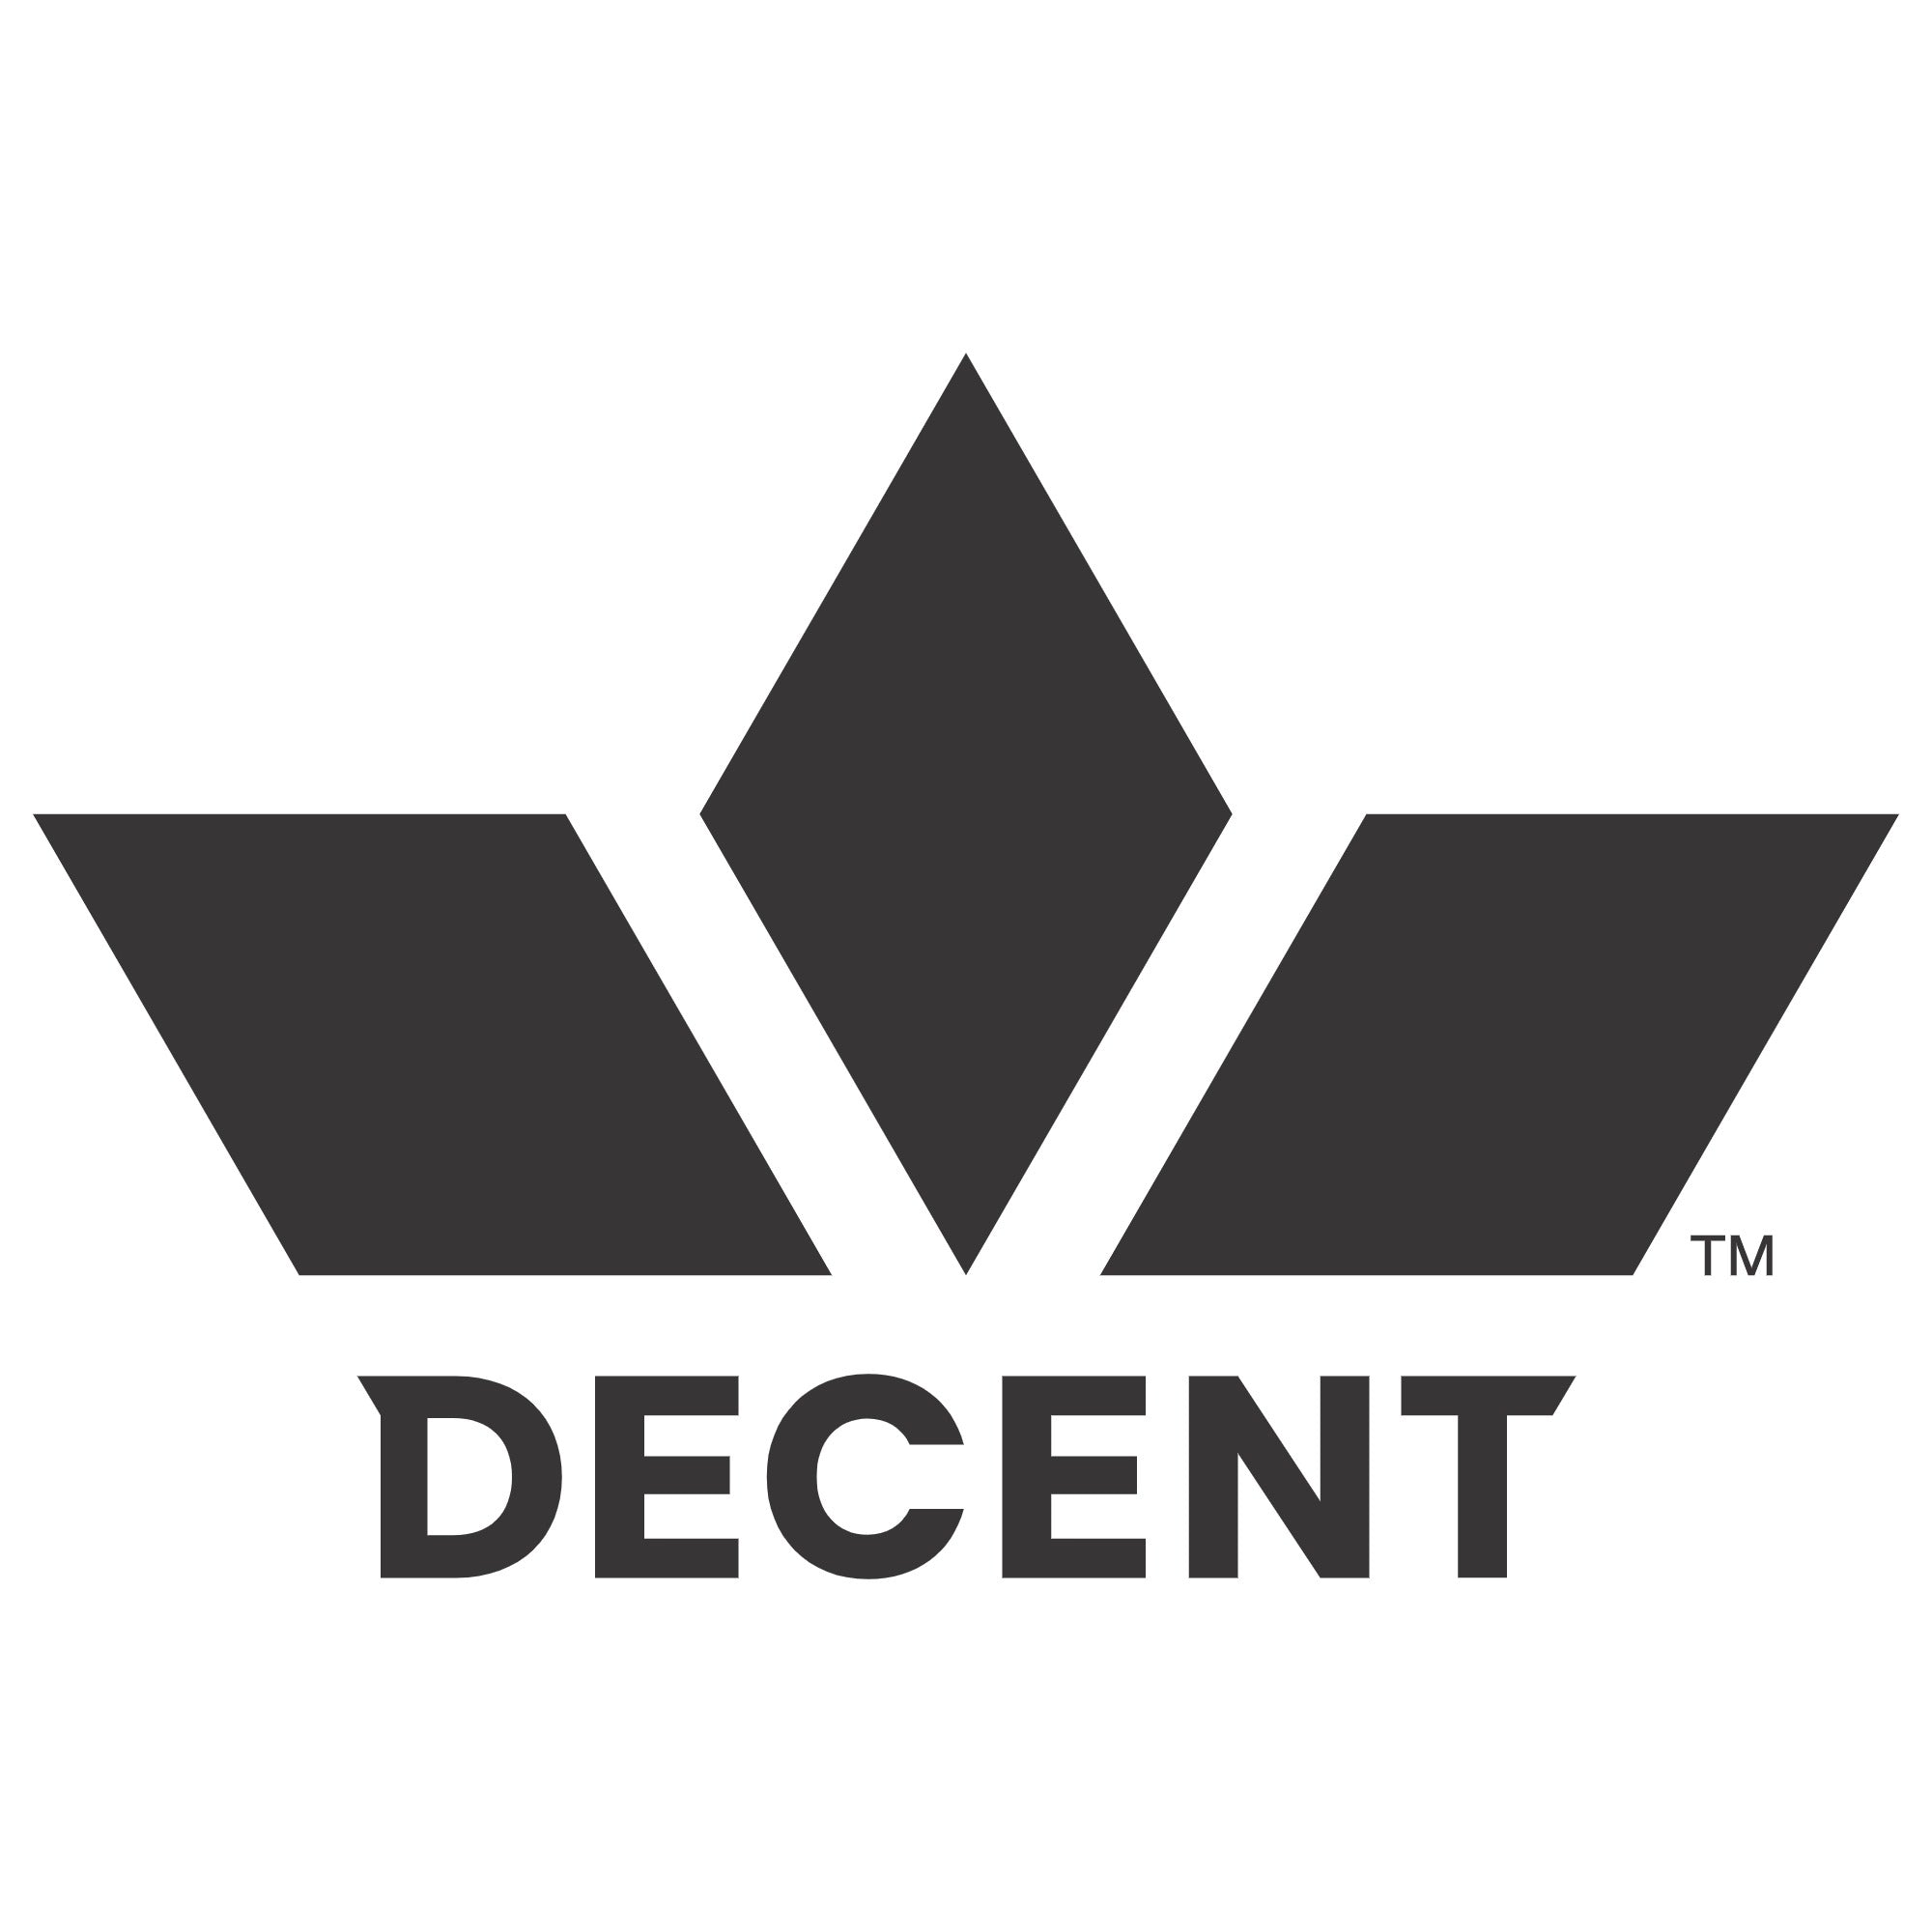 The Decent Co. logo